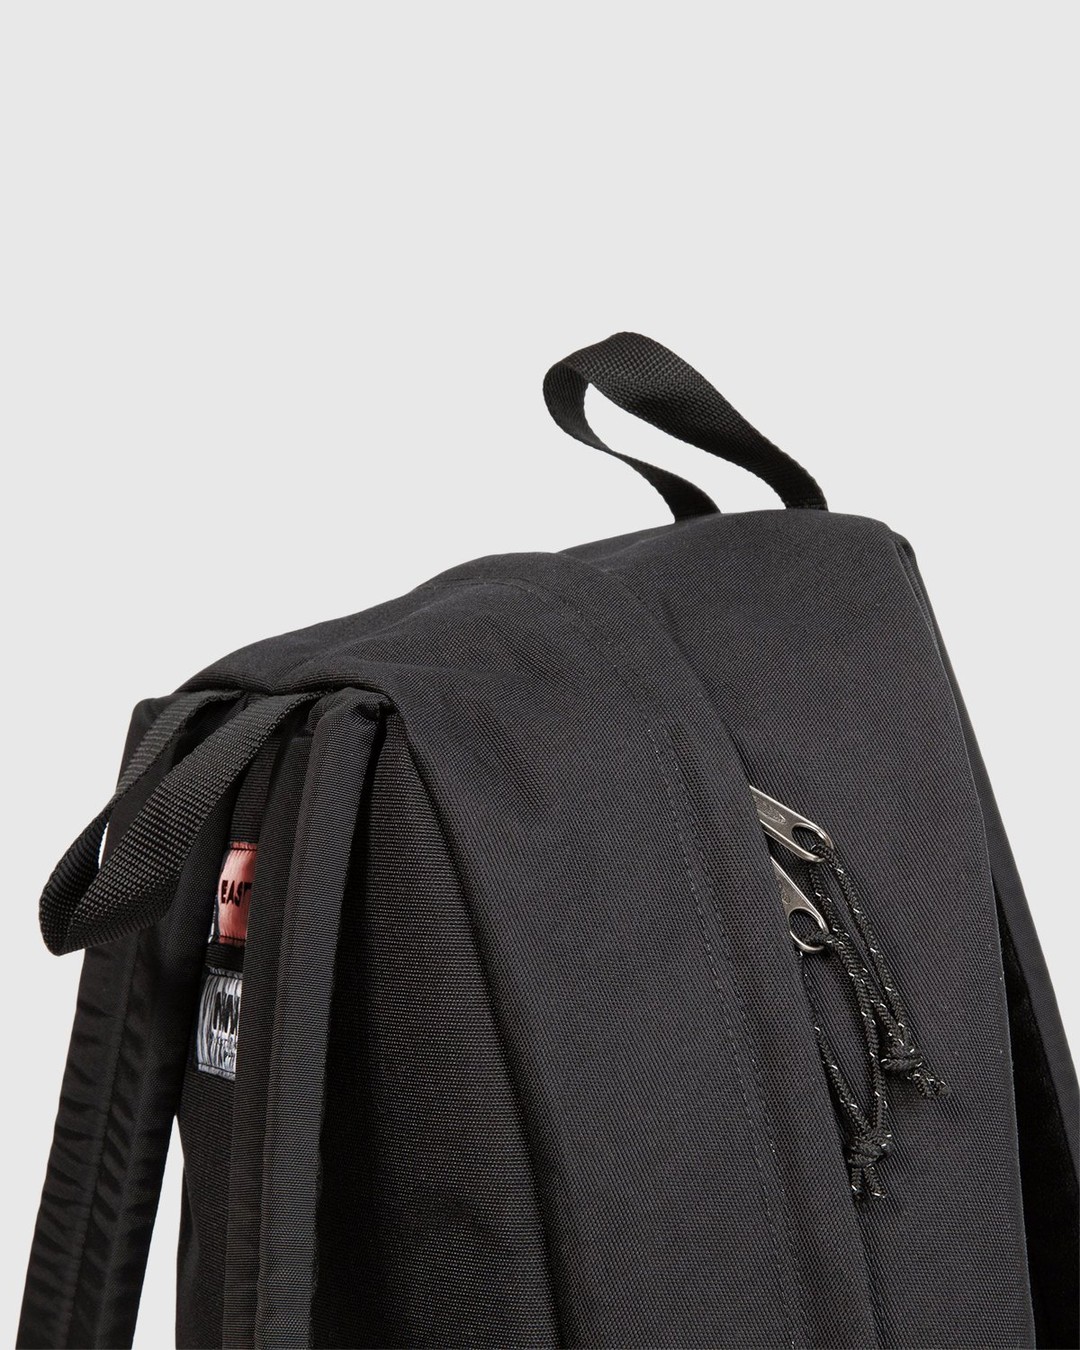 MM6 Maison Margiela x Eastpak – Padded XL Backpack Black